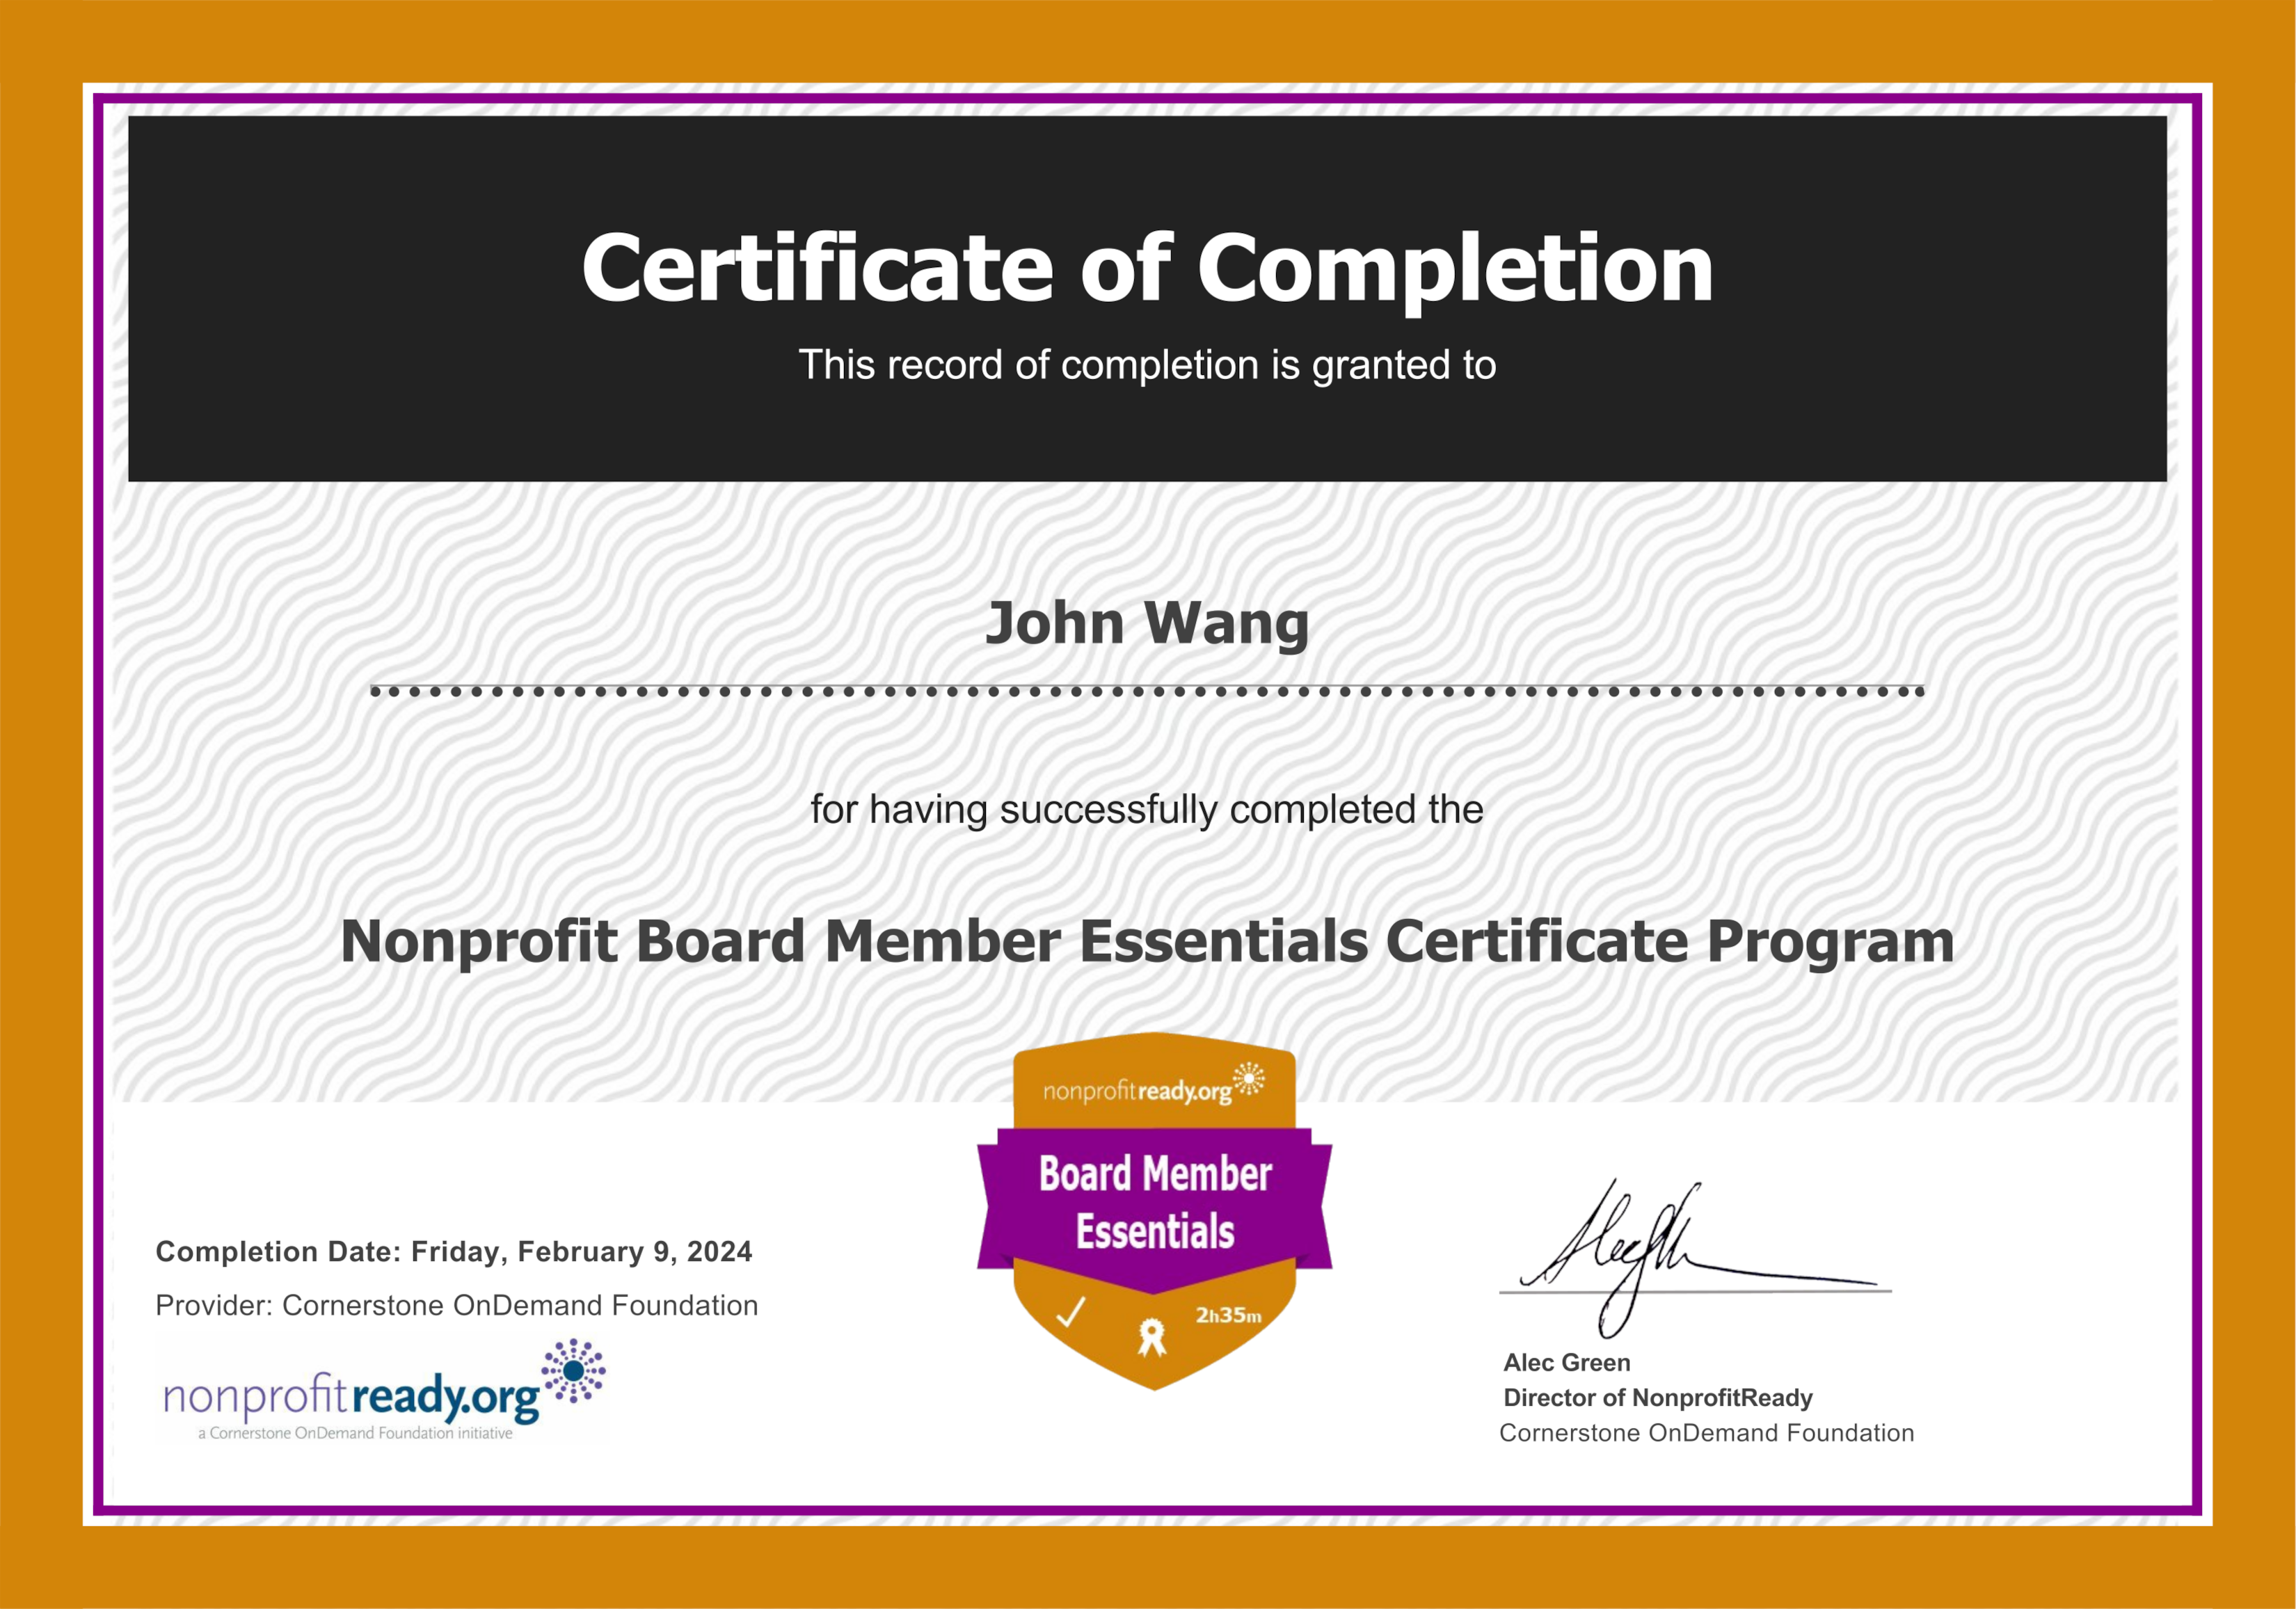 John's Nonprofit Board Member Essentials Certificate from Cornerstone OnDemand Foundation